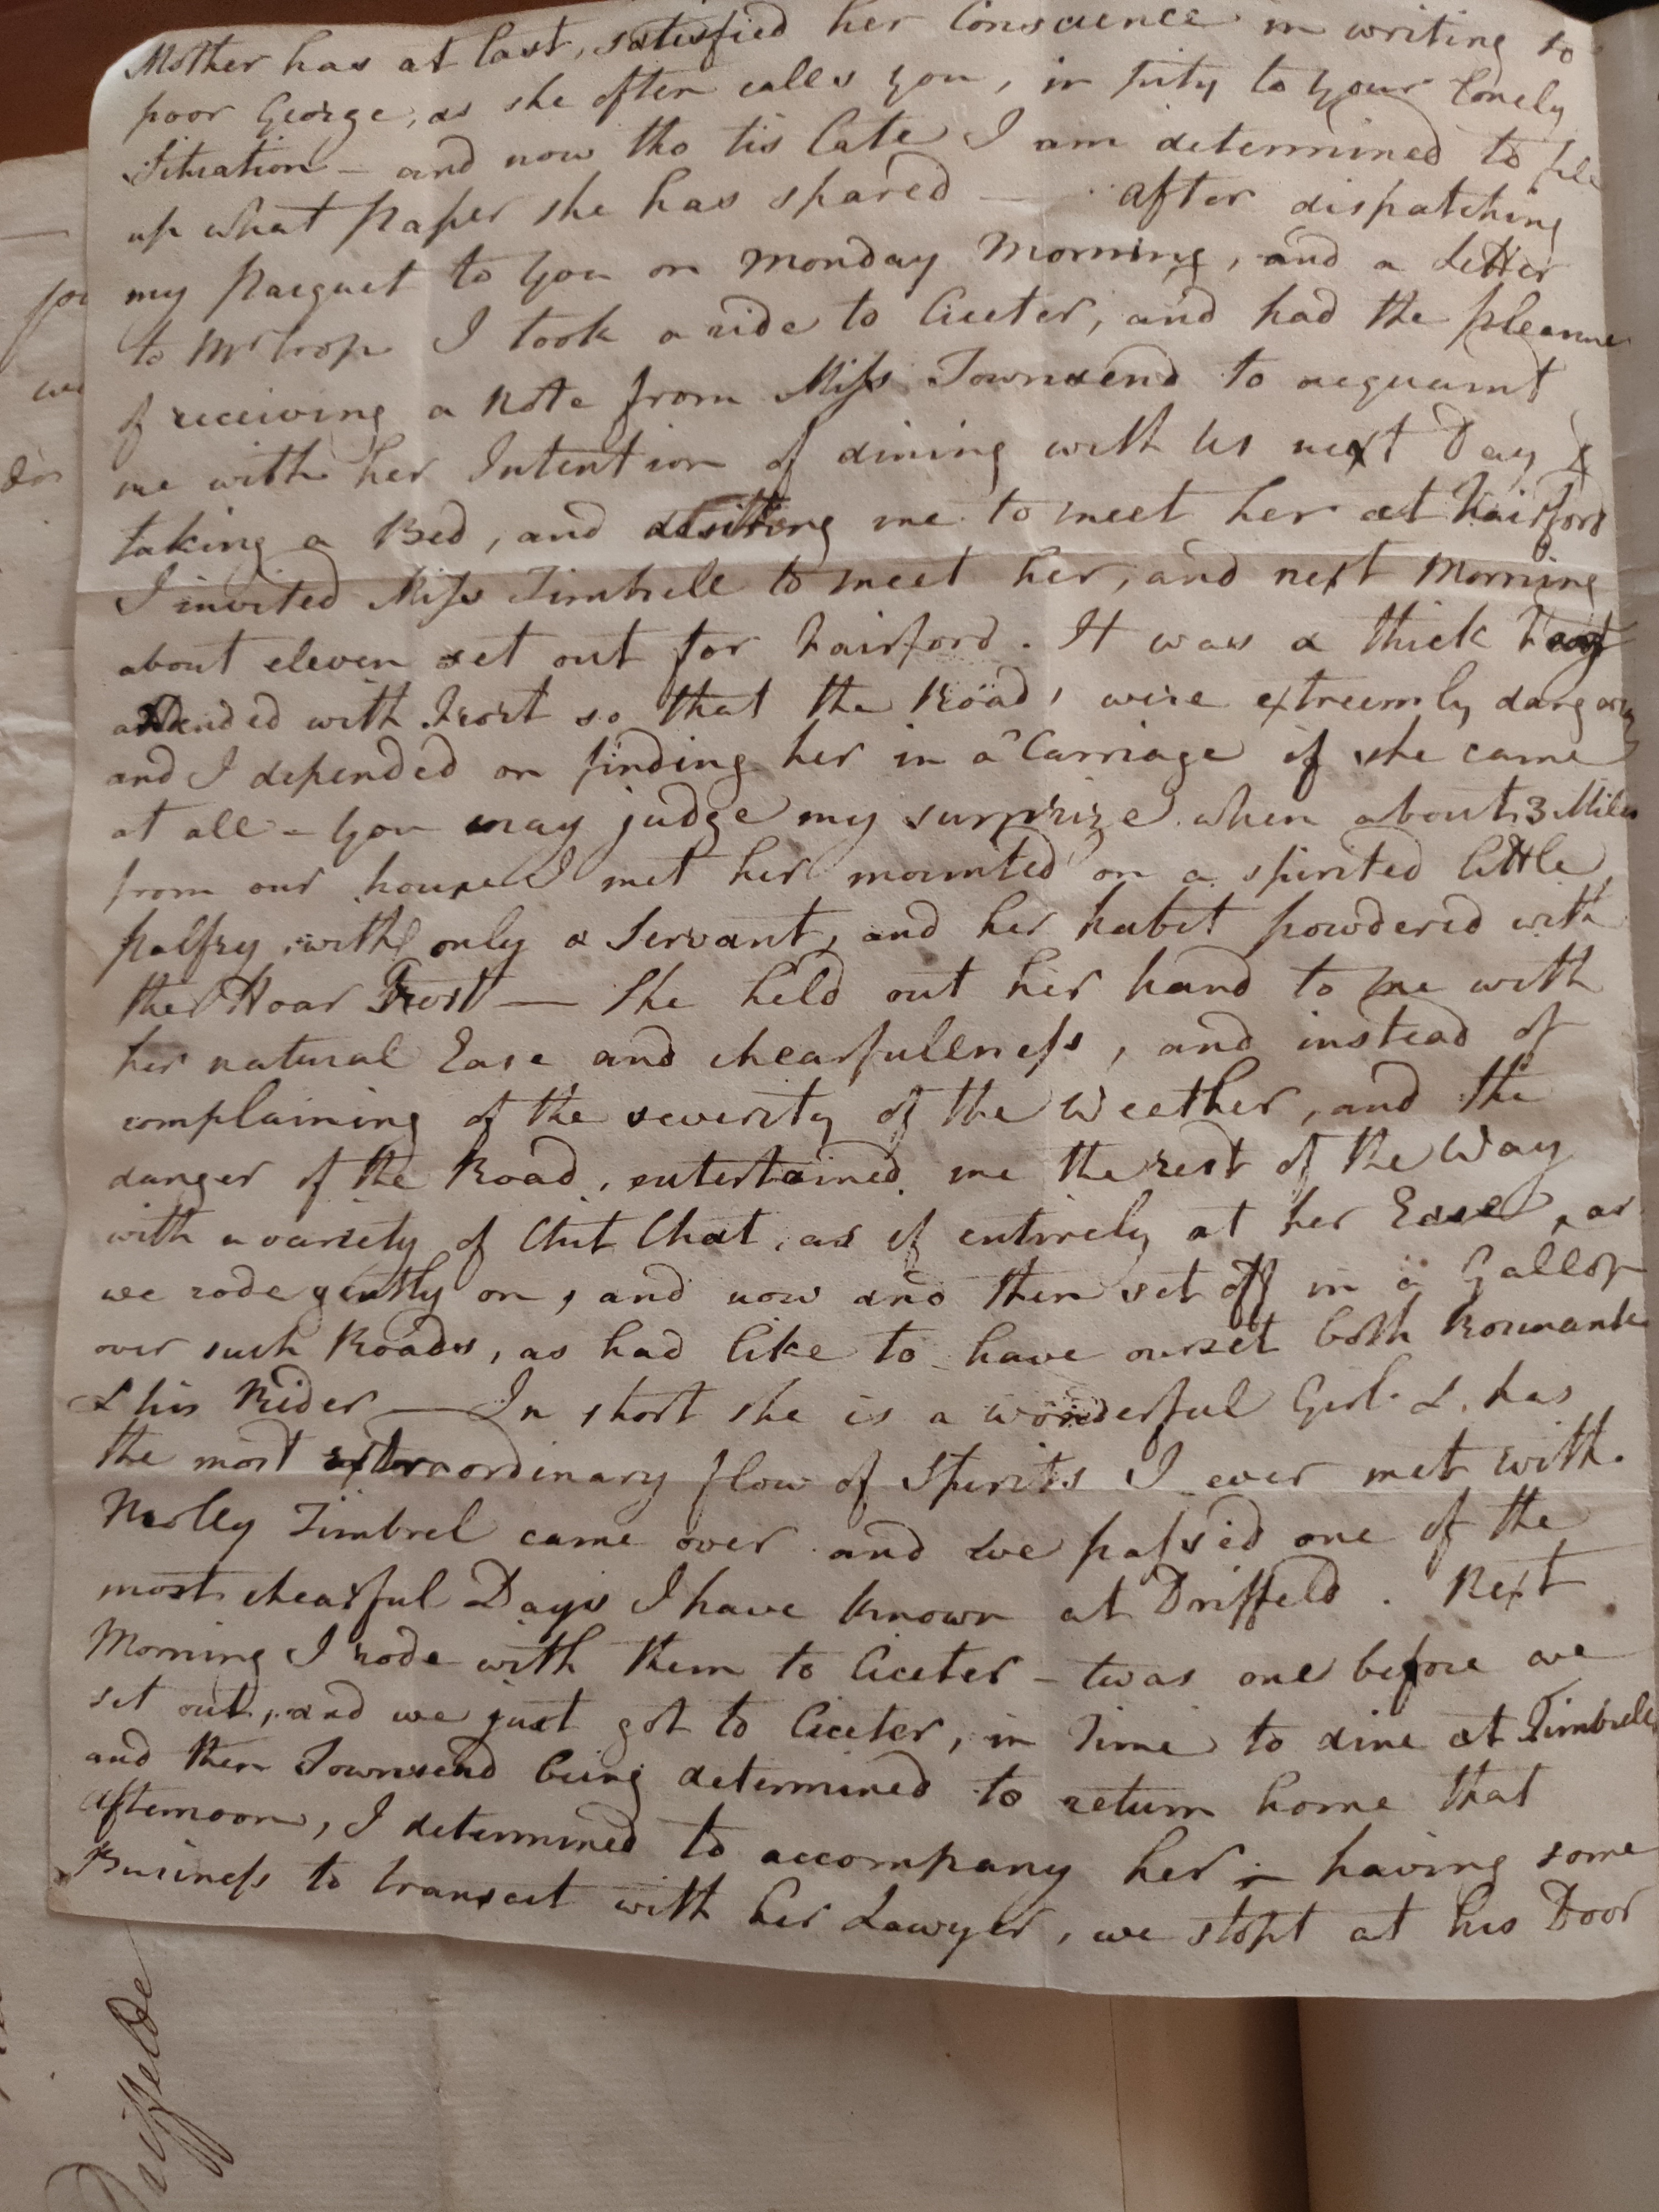 Image #2 of letter: Elizabeth Cumberland and Richard Cumberland to George Cumberland, 29 December 1777